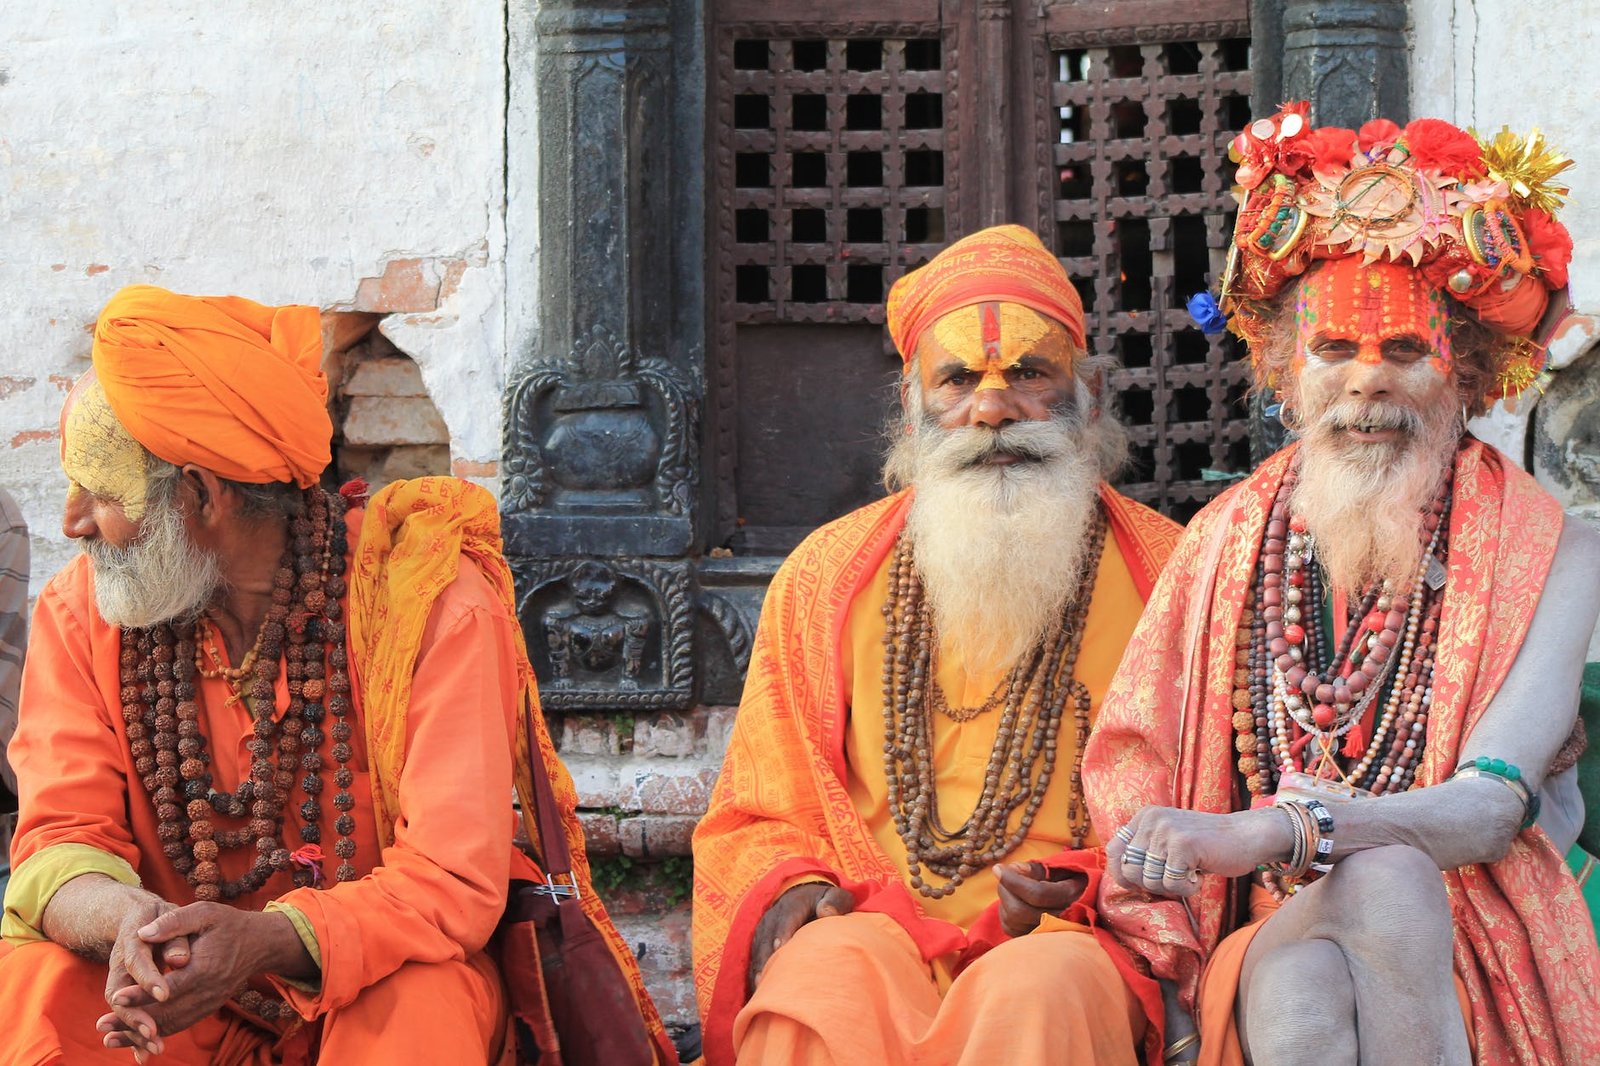 sadhu sitting together at muktinath temple